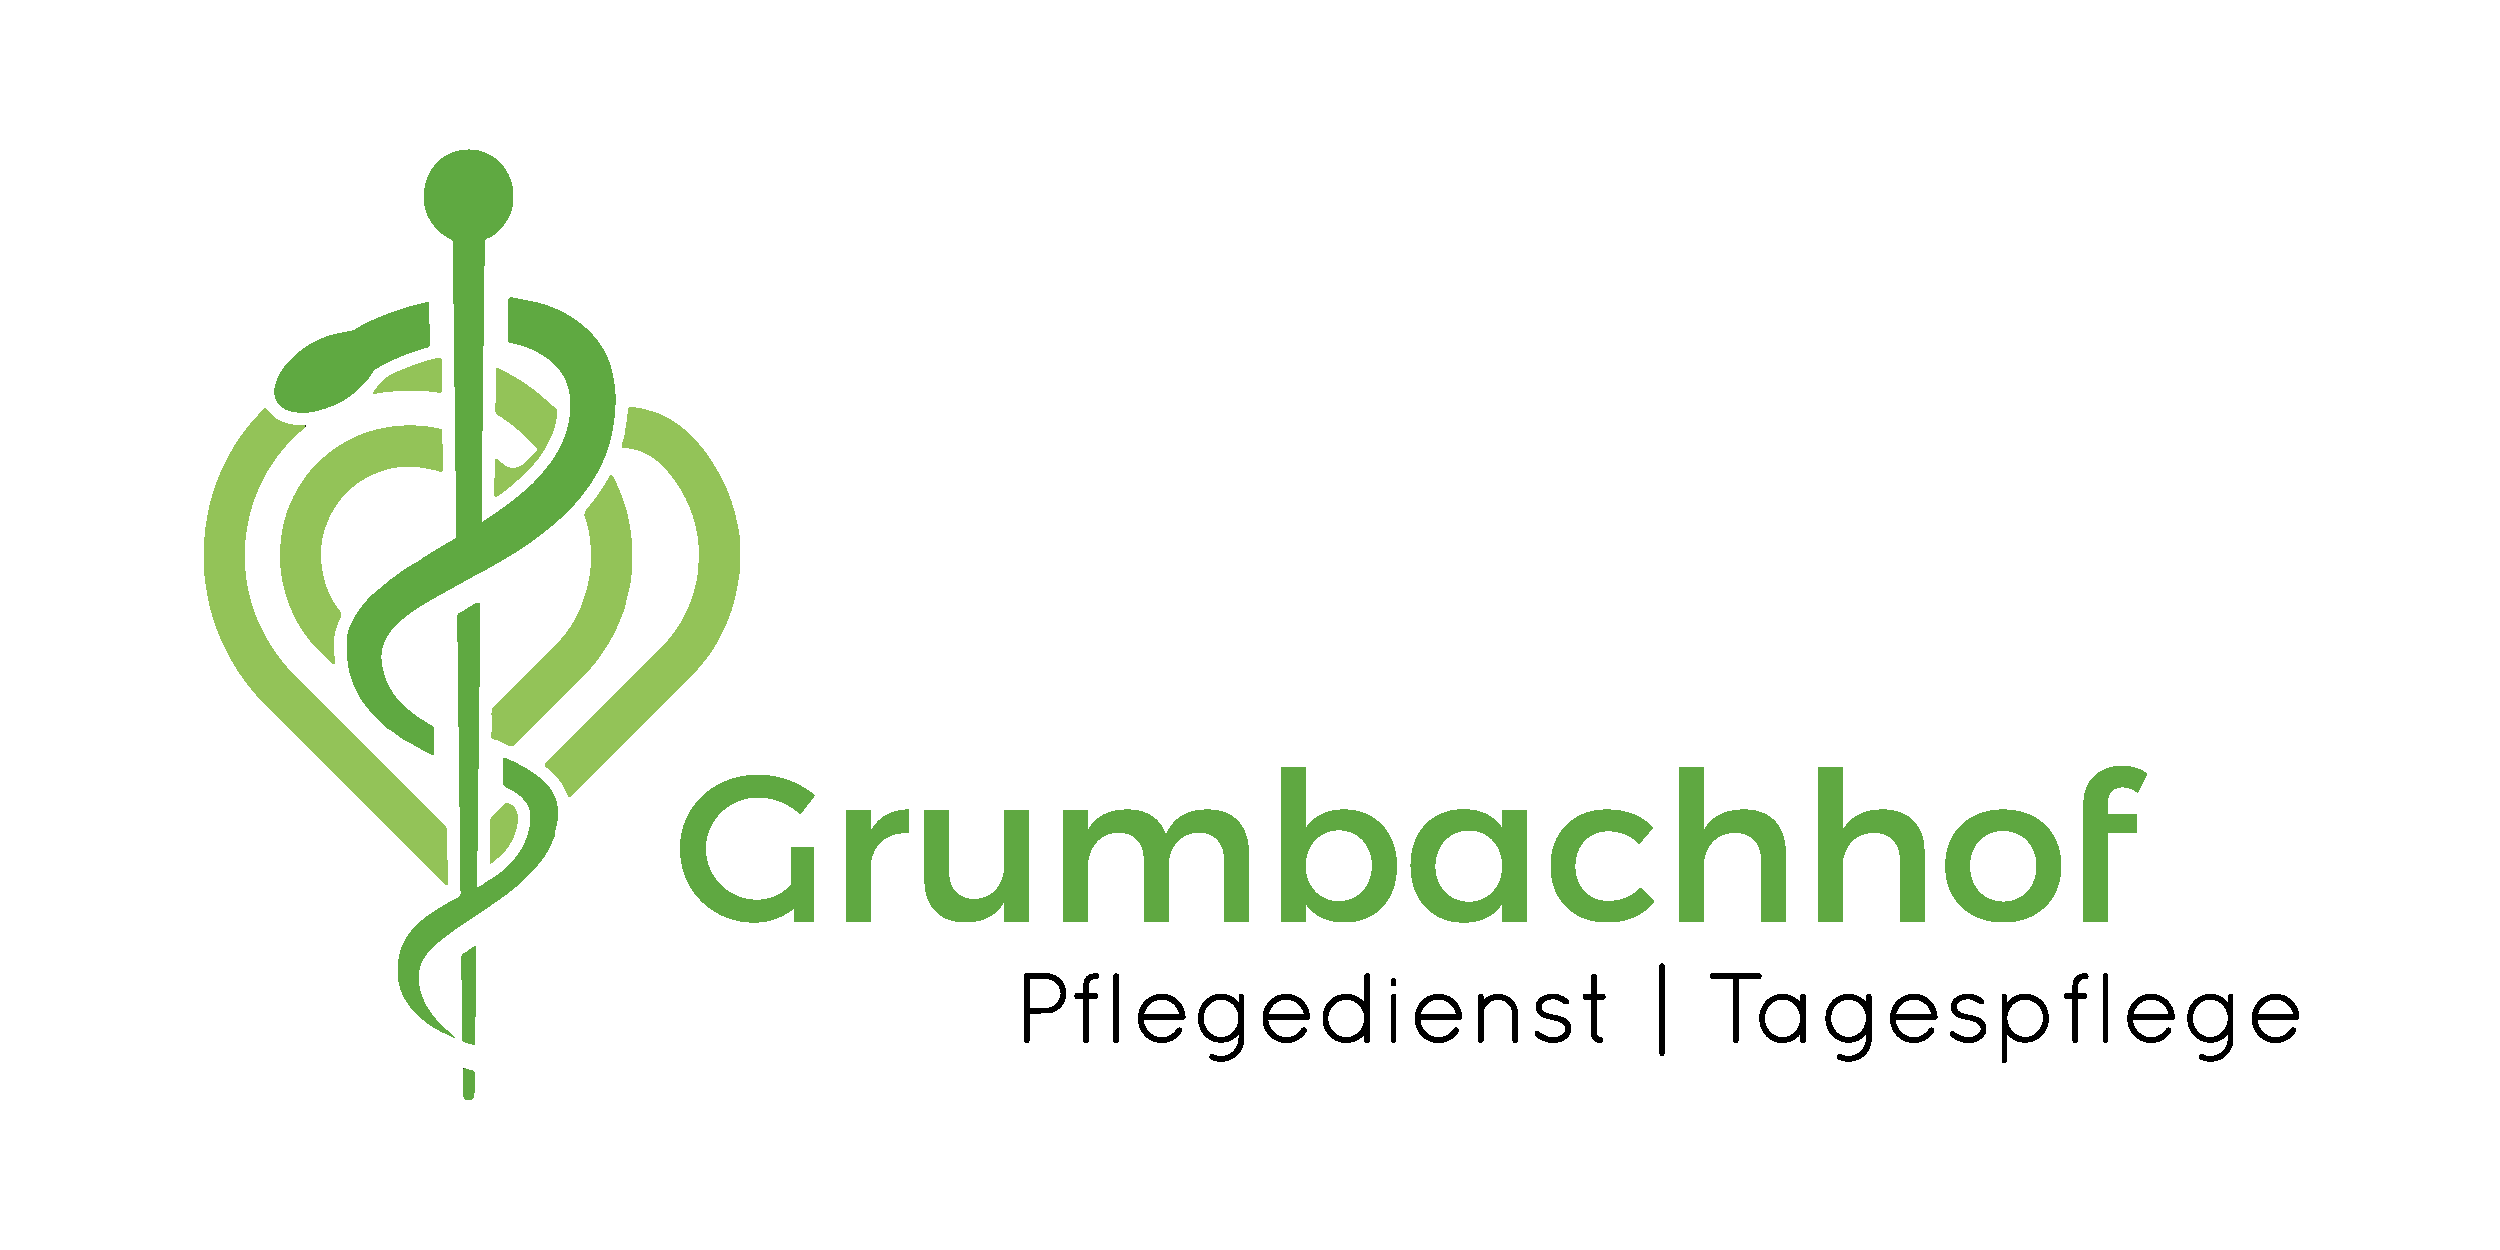 Grumbachhof